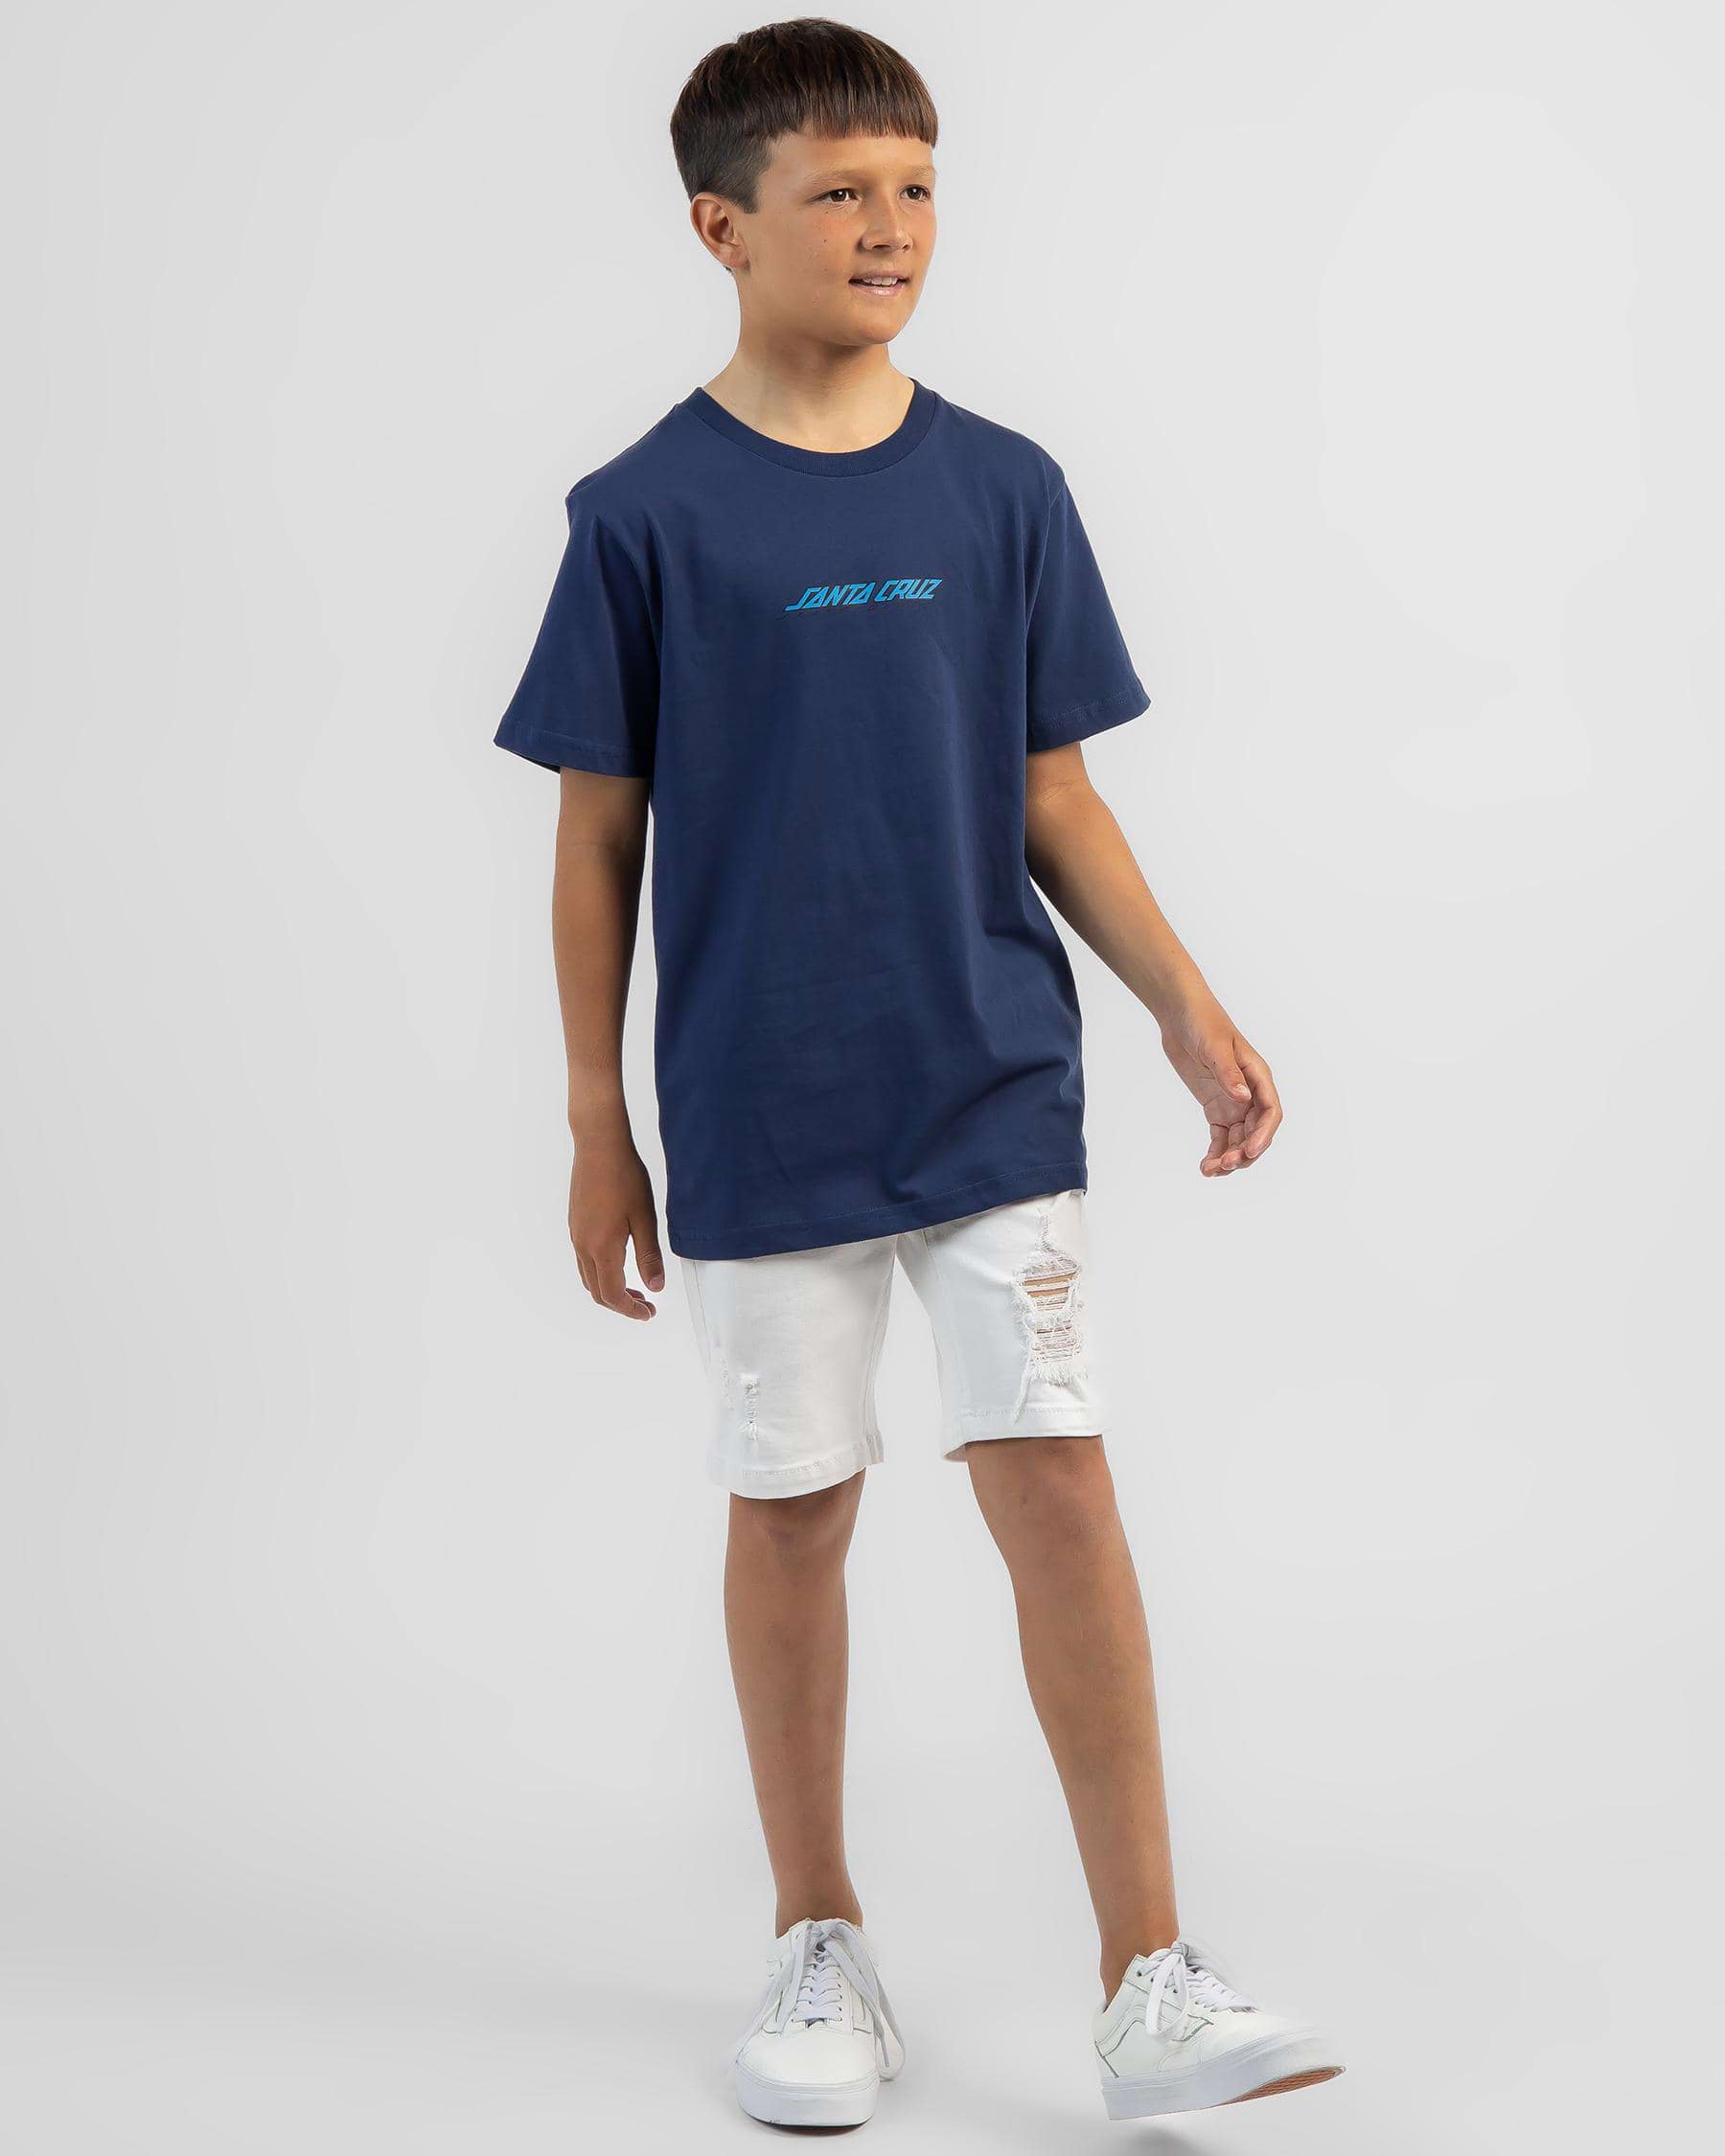 Santa Cruz Boys' Wave Slasher T-Shirt In Navy - Fast Shipping & Easy ...